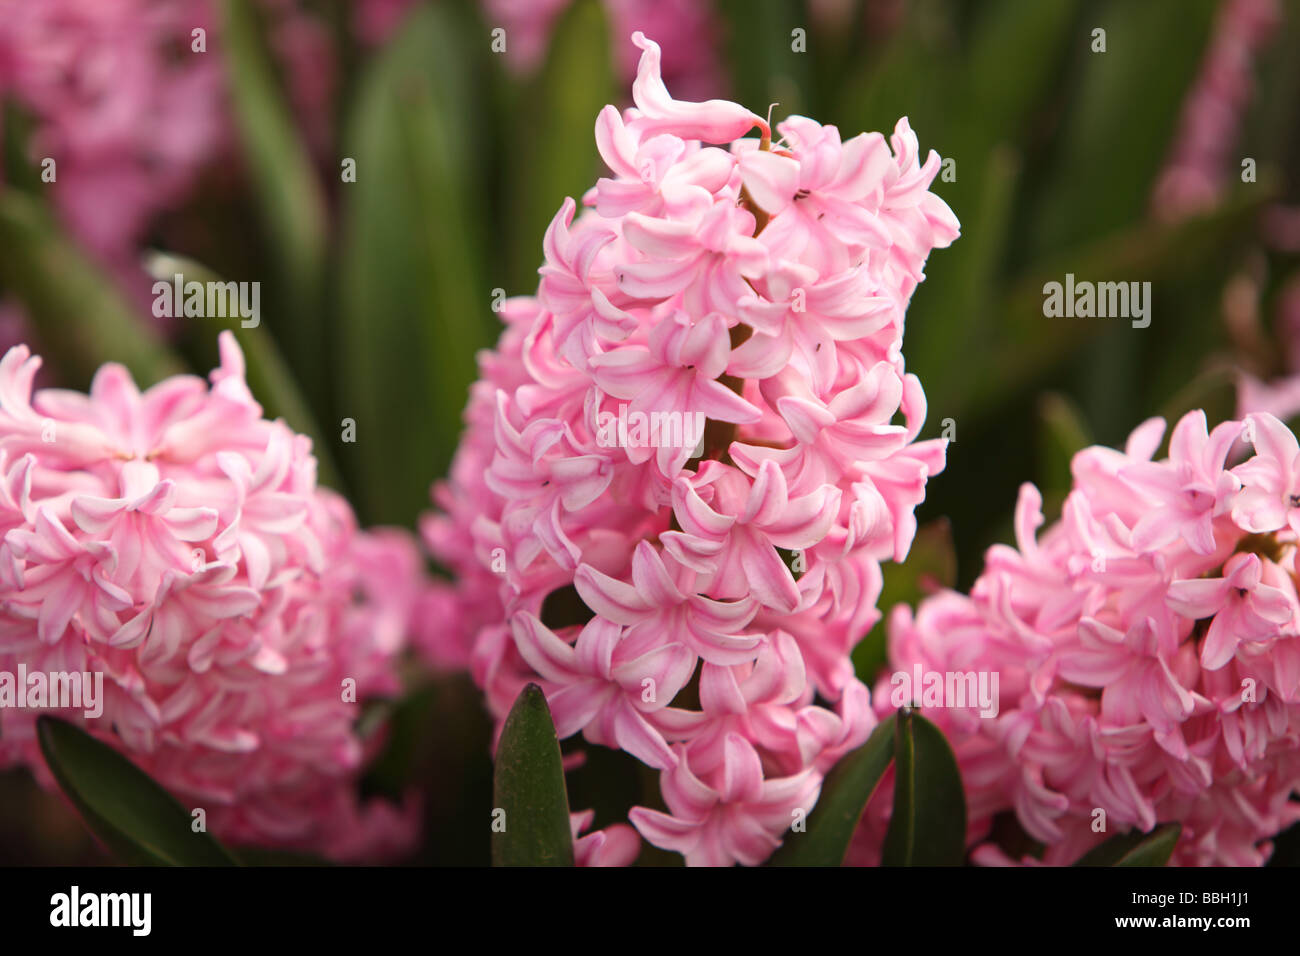 Rosa fiori di giacinto closeup Foto Stock